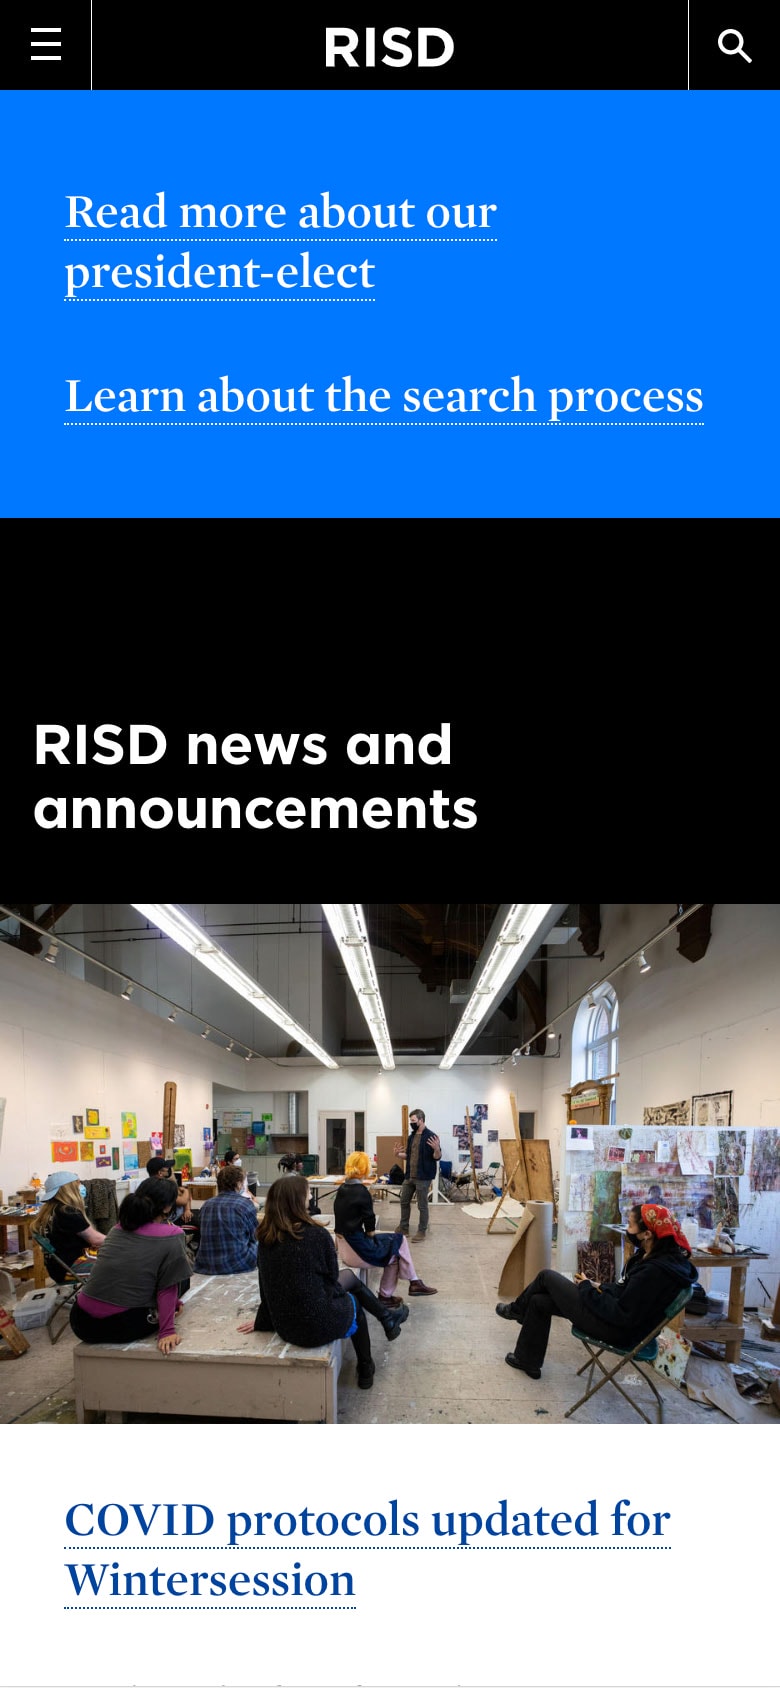 RISD homepage news feed (mobile)